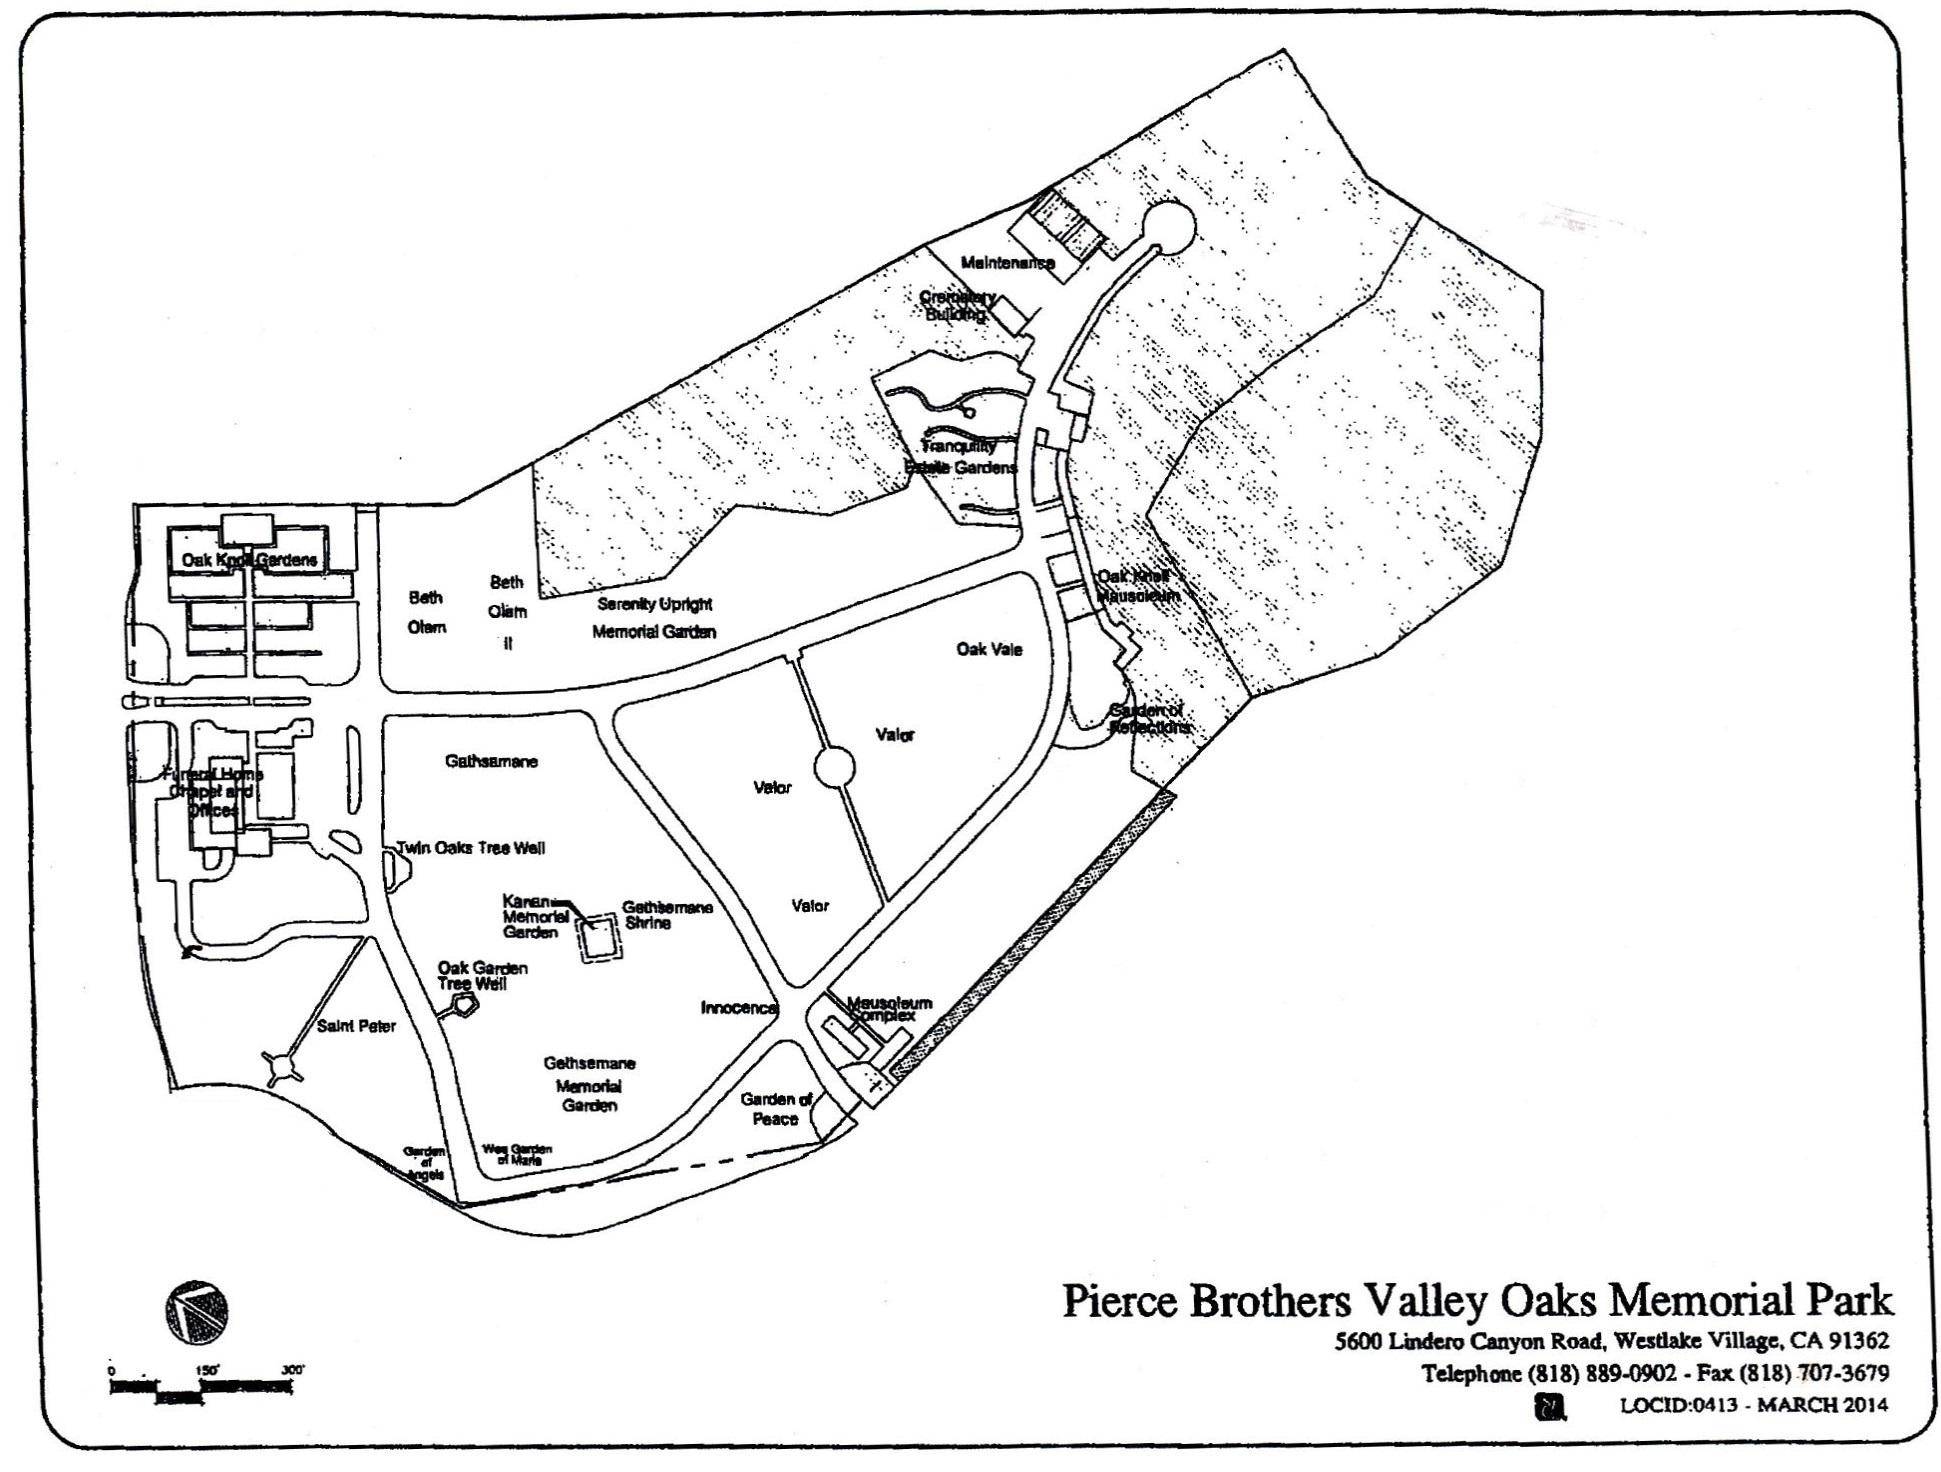 Cemetery Map of Pierce Brothers Valley Oaks Memorial Park in Westlake Village, California.